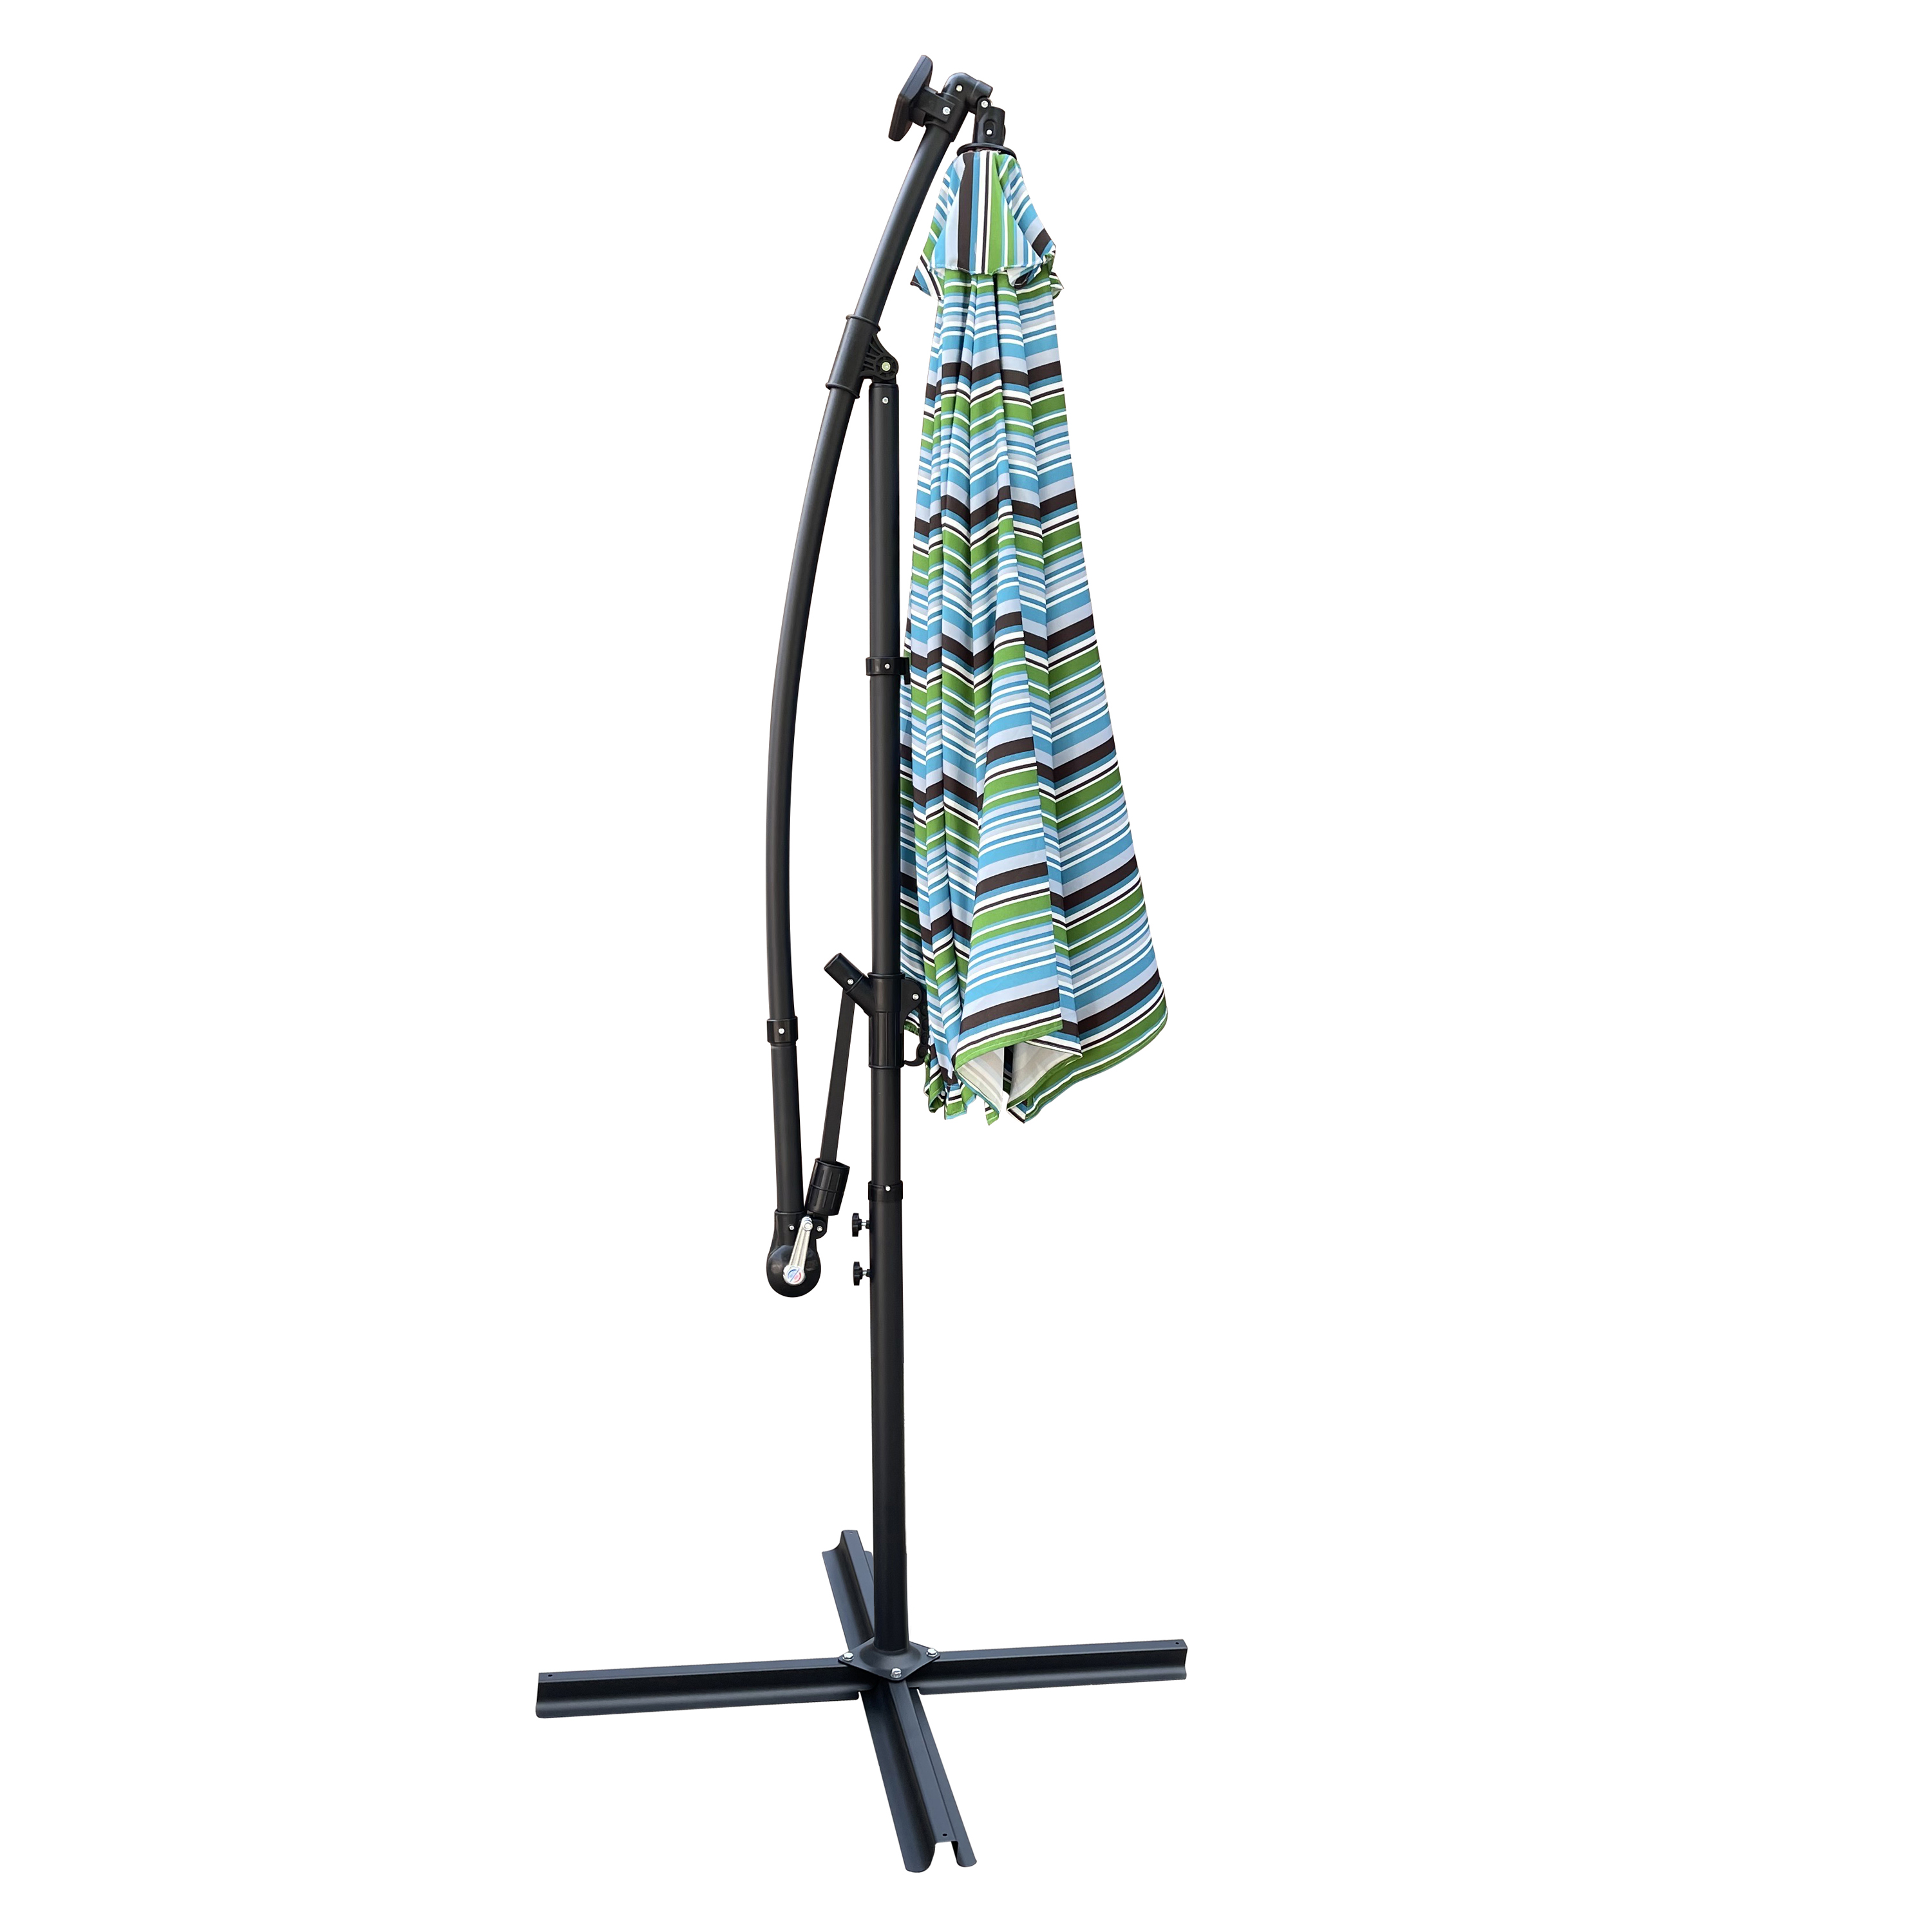 Branax Patio Umbrella, 10 FT Offset Patio Umbrella with Base Included, Outdoor Patio Umbrella with Solar Lights, Crank, Push Button Tilt, Large Patio Umbrella for Garden (Blue Striped) - image 4 of 7